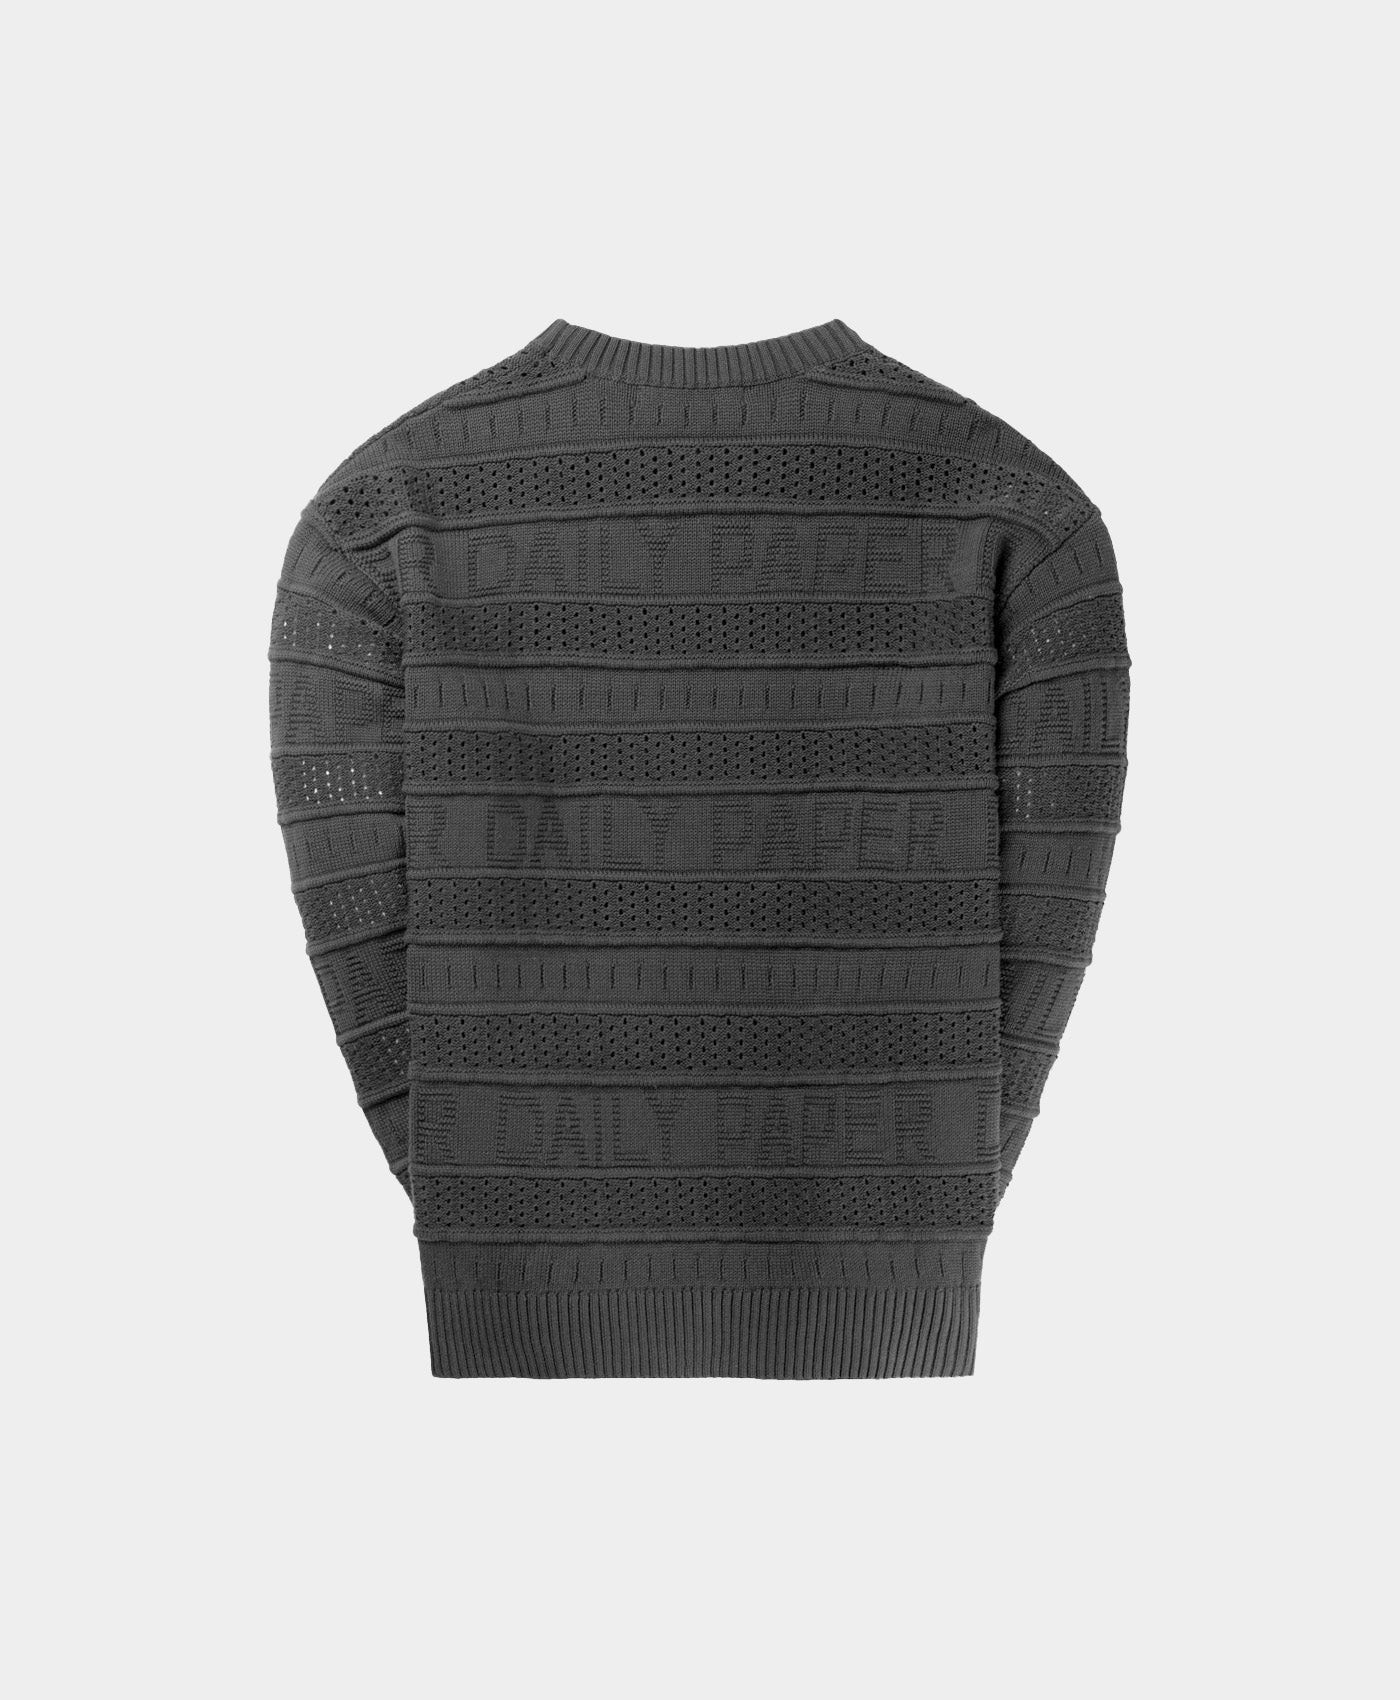 DP - Black Rajih Knit Sweater - Packshot - Rear